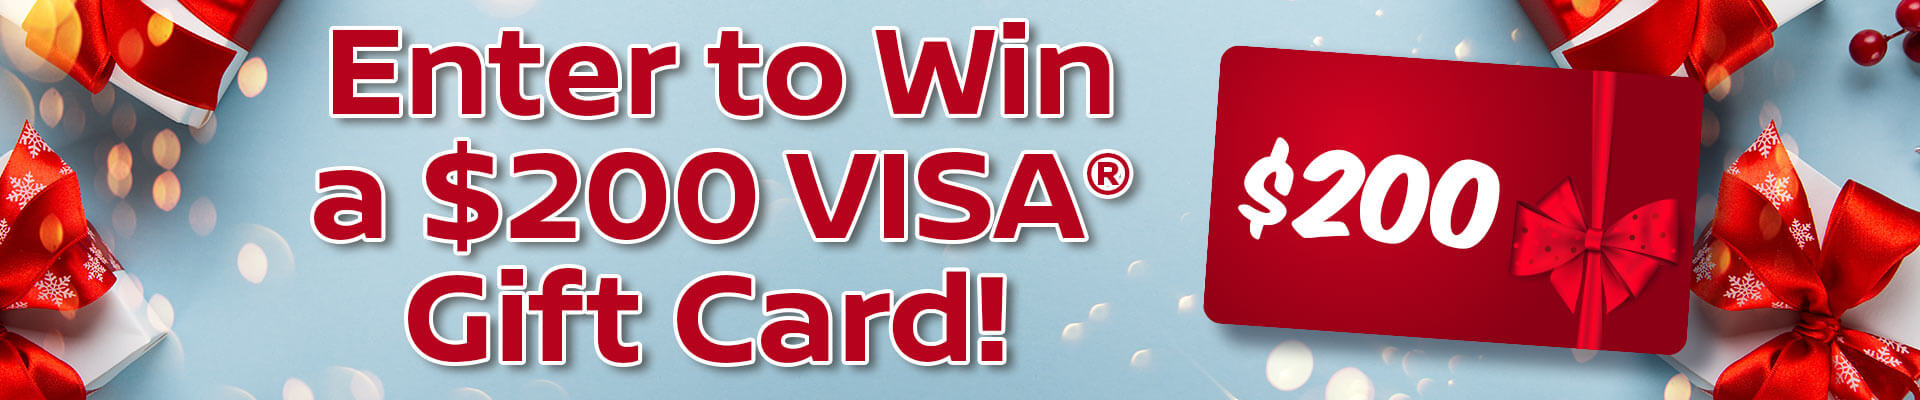 Enter to Win a $200 VISA Gift Card